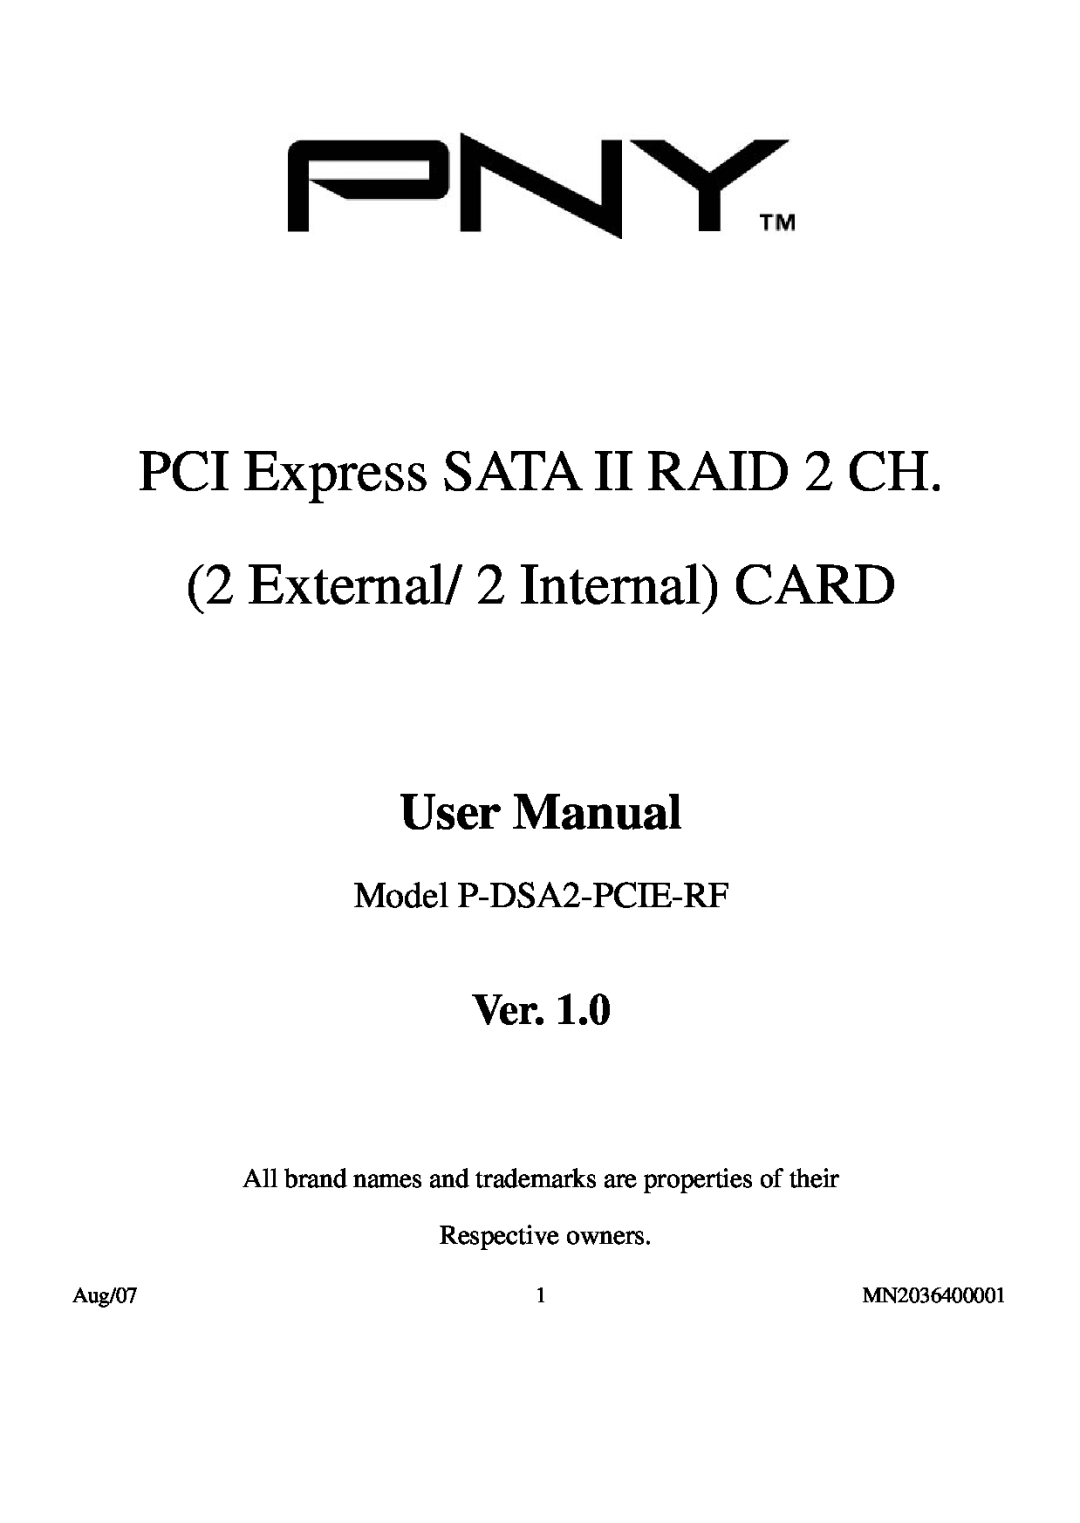 PNY P-DSA2-PCIE-RF user manual PCI Express SATA II RAID 2 CH 2 External/ 2 Internal CARD, User Manual, Respective owners 